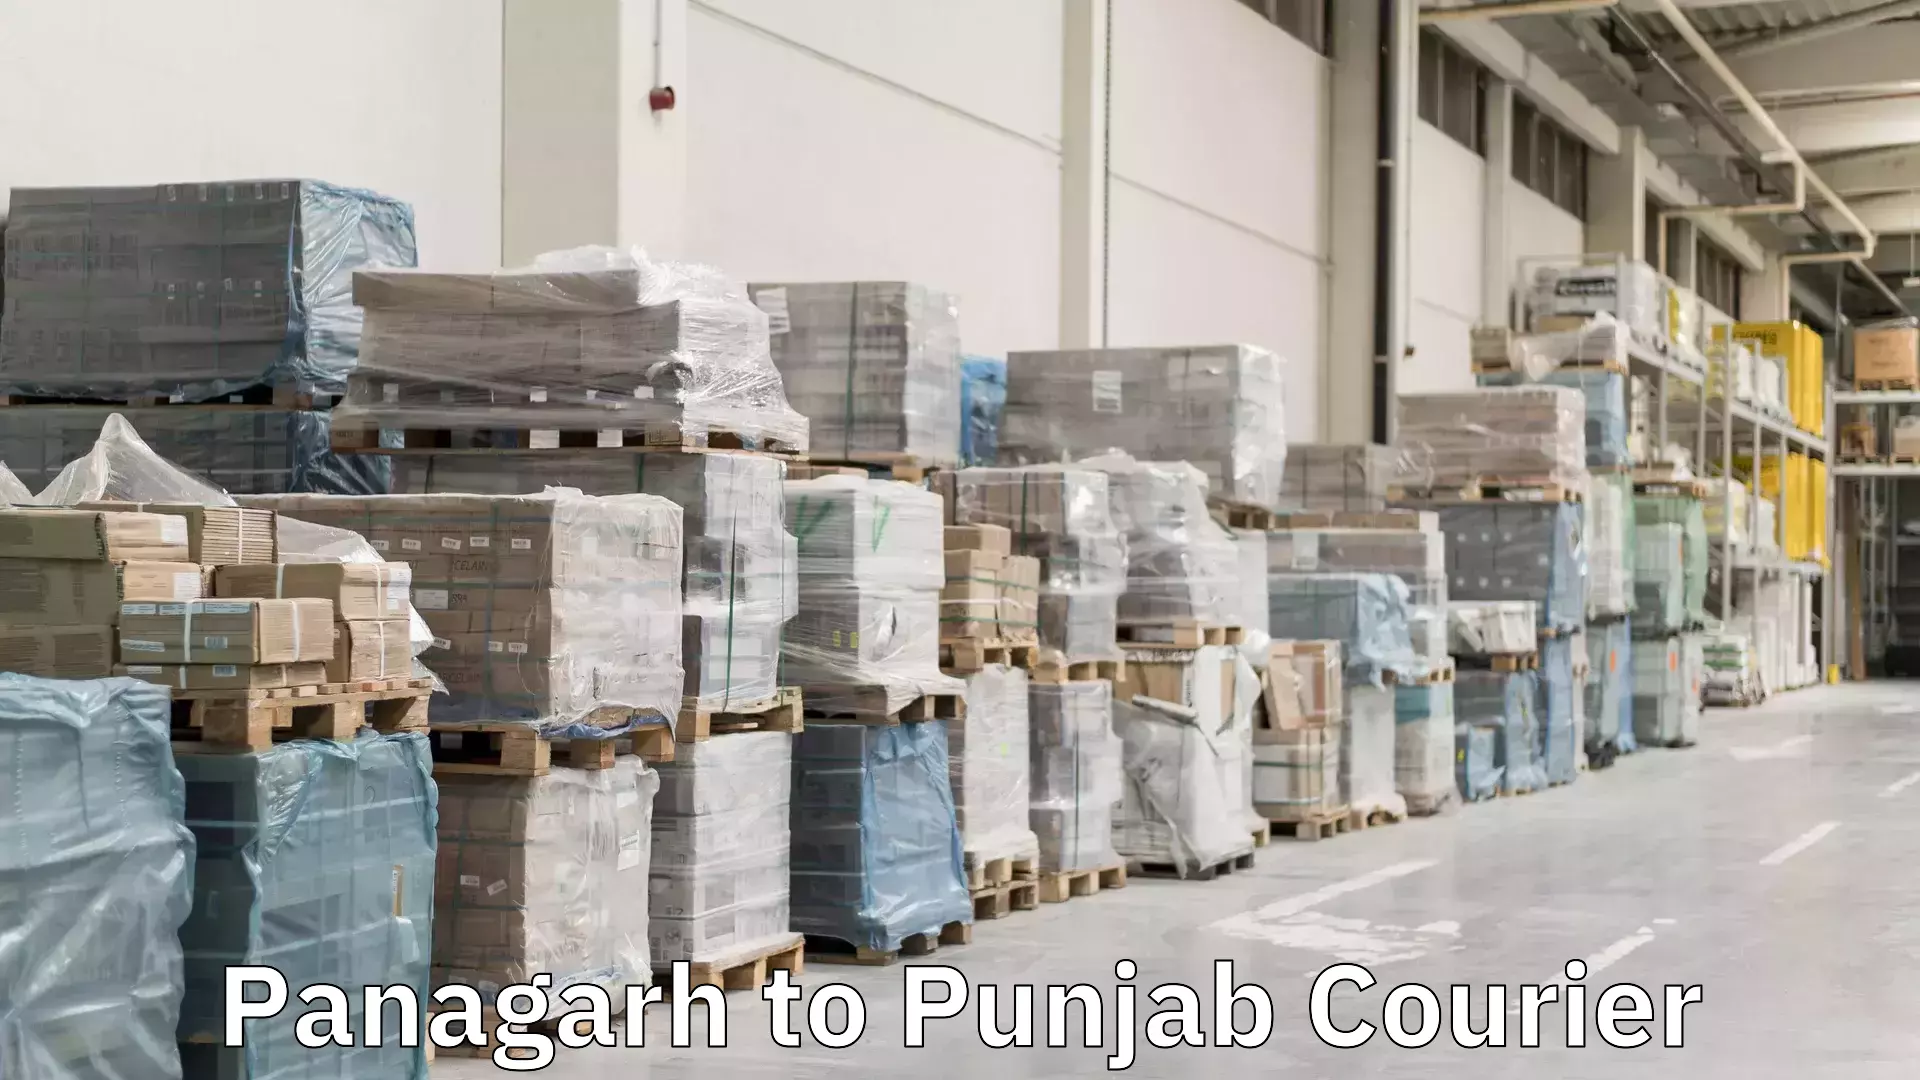 Express mail solutions Panagarh to Punjab